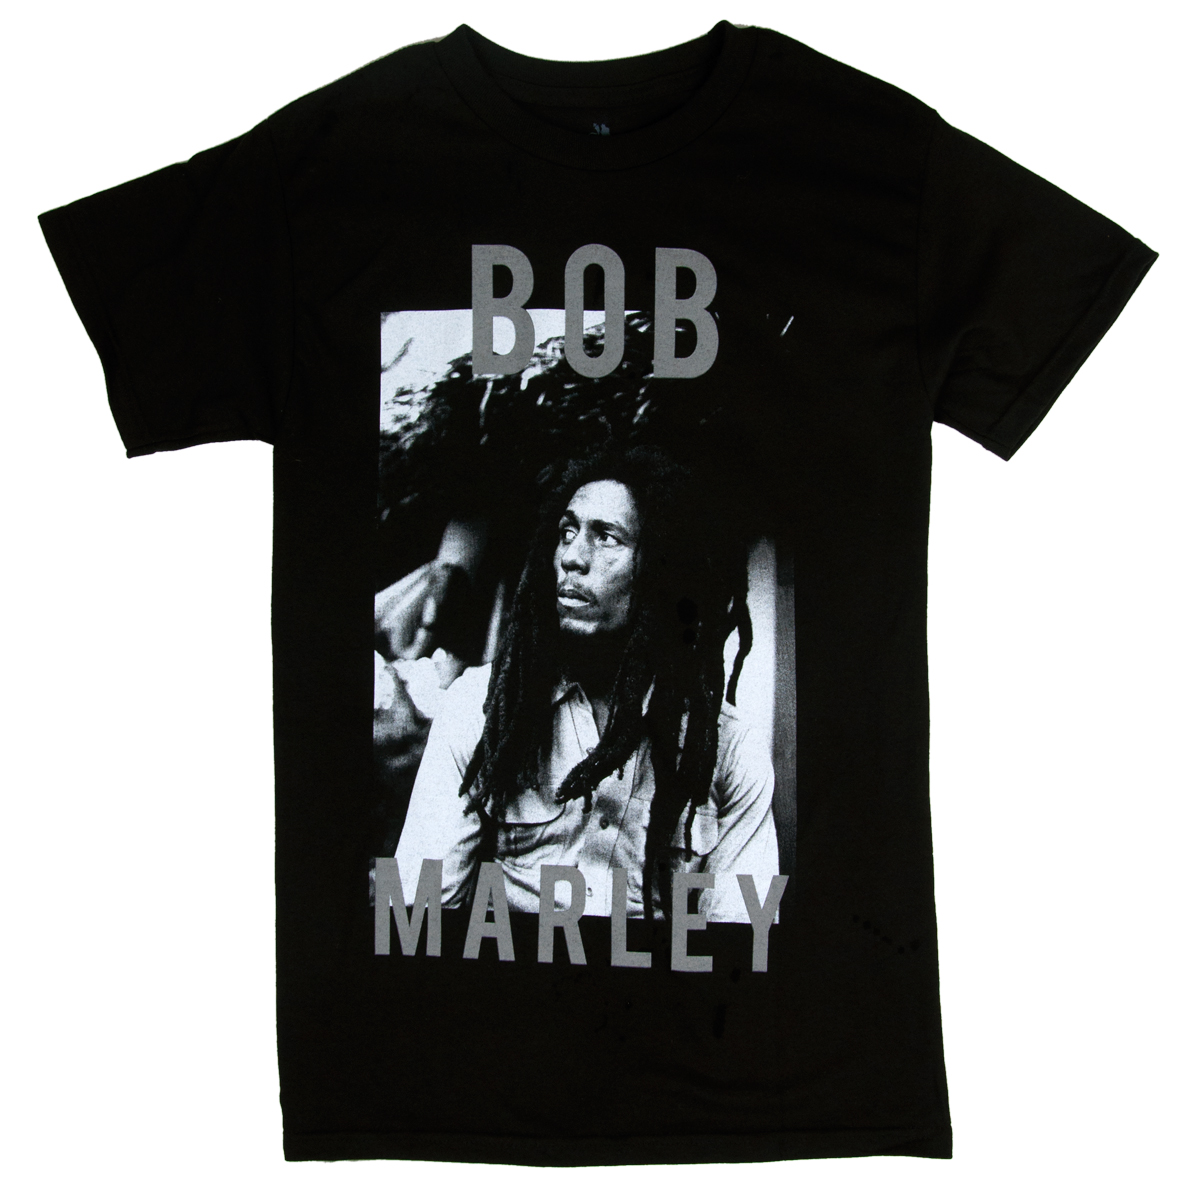 Bob Marley B&W Stare Black T-Shirt – Men’s at RastaEmpire.com